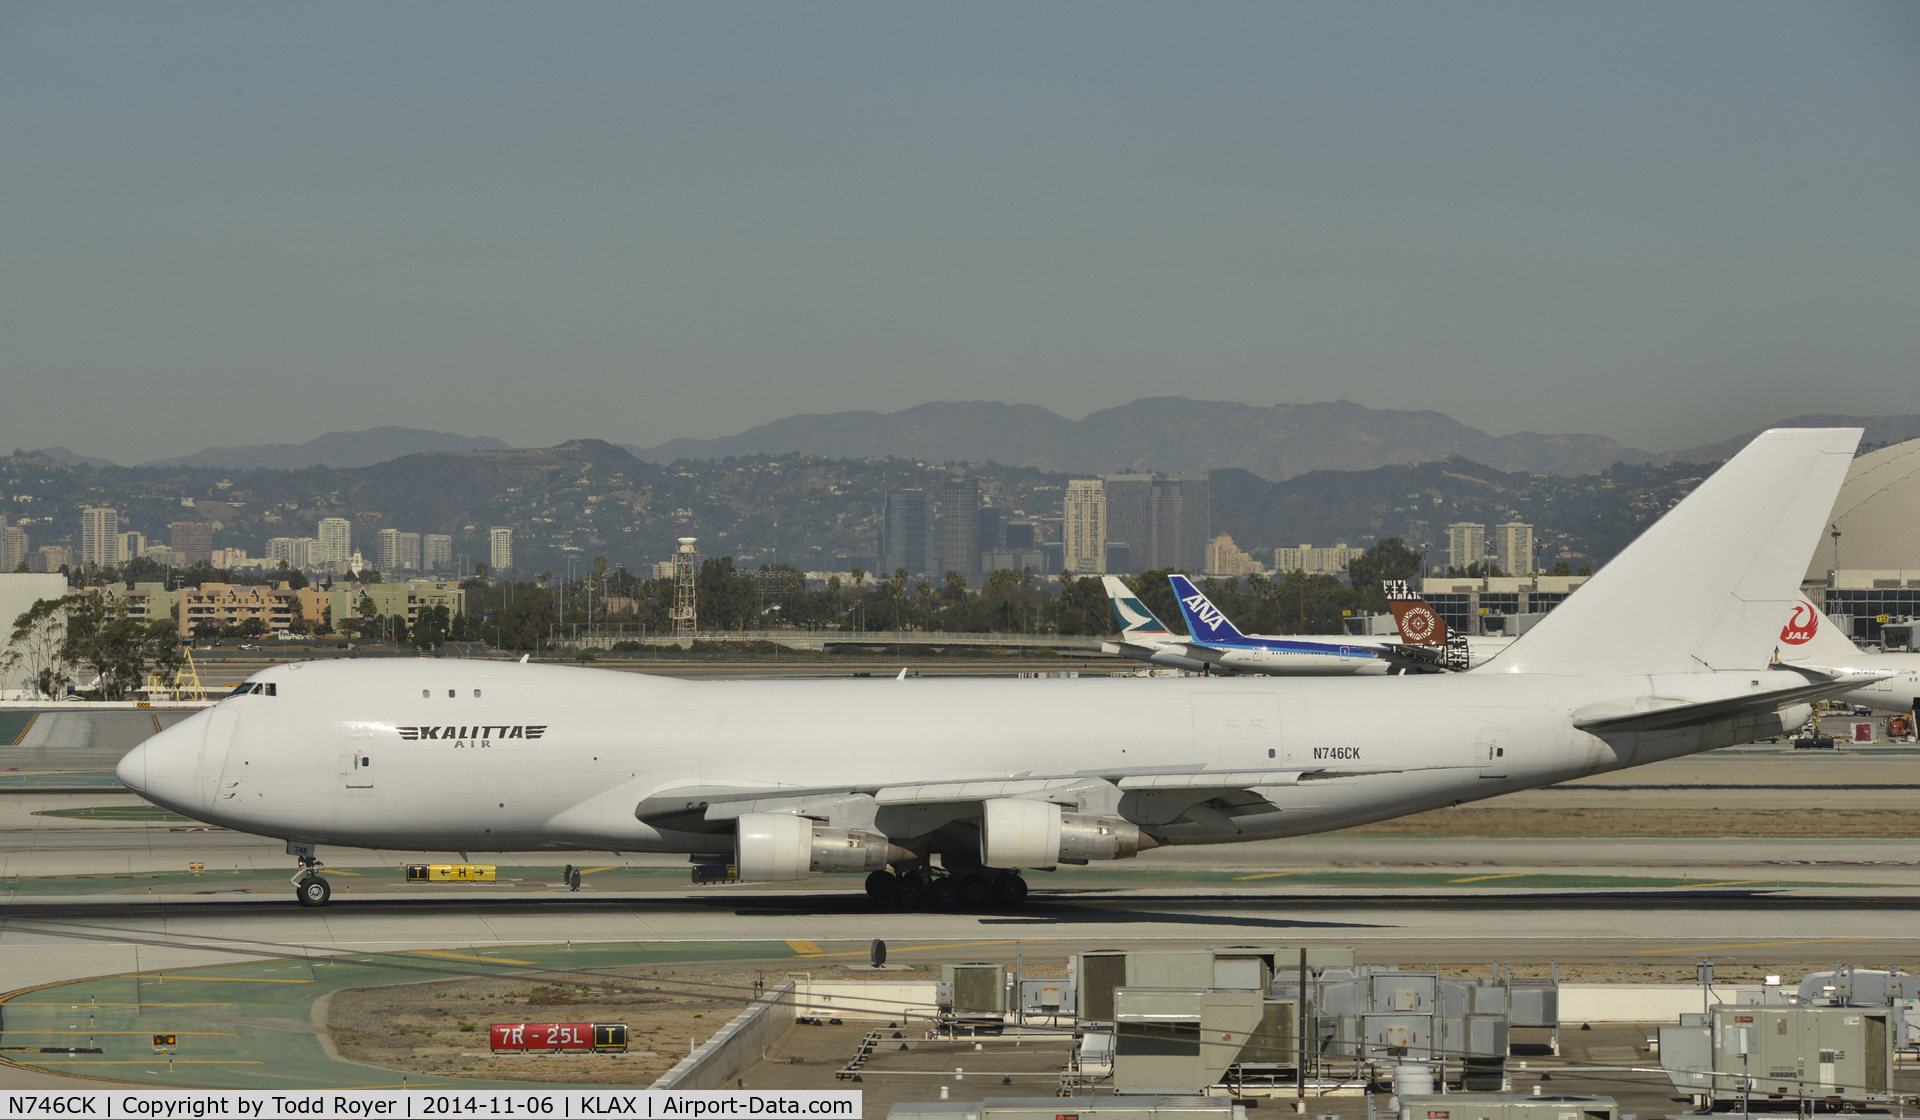 N746CK, 1982 Boeing 747-246F C/N 22989, Landing on 25L at LAX